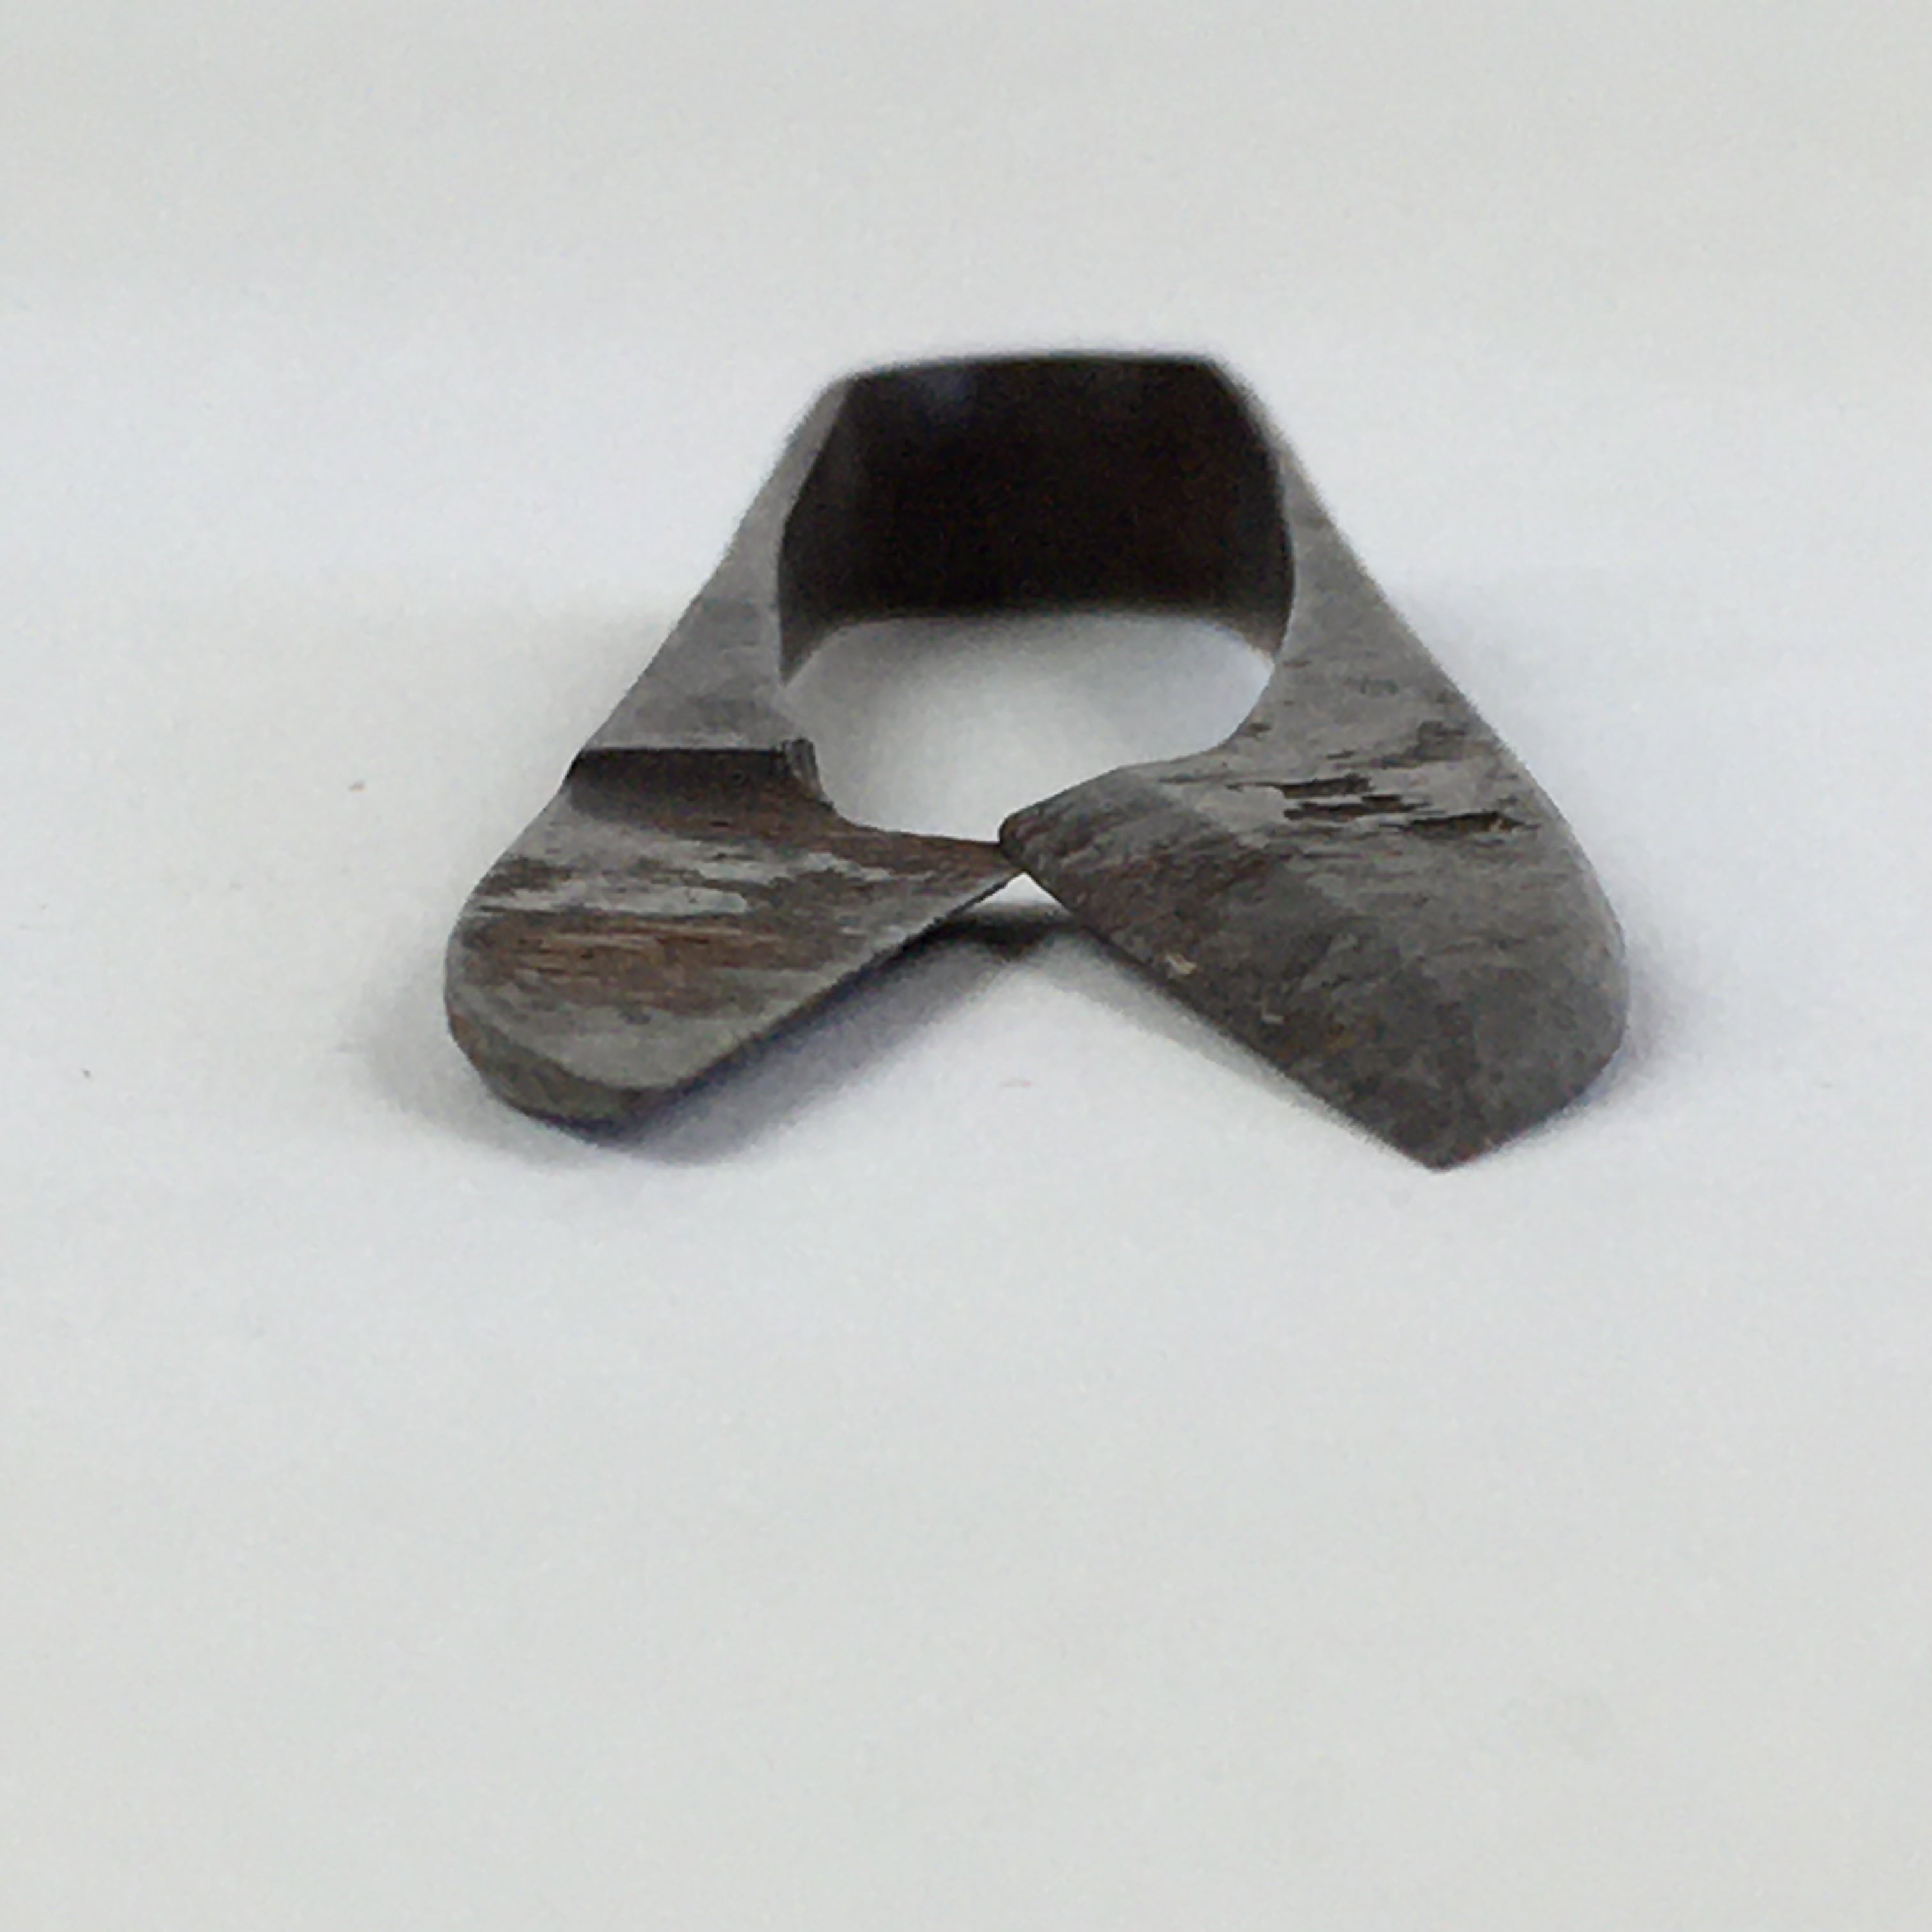 Japanese Sewing Scissors Vtg Iron Small Thread Trimmer Scissors T96